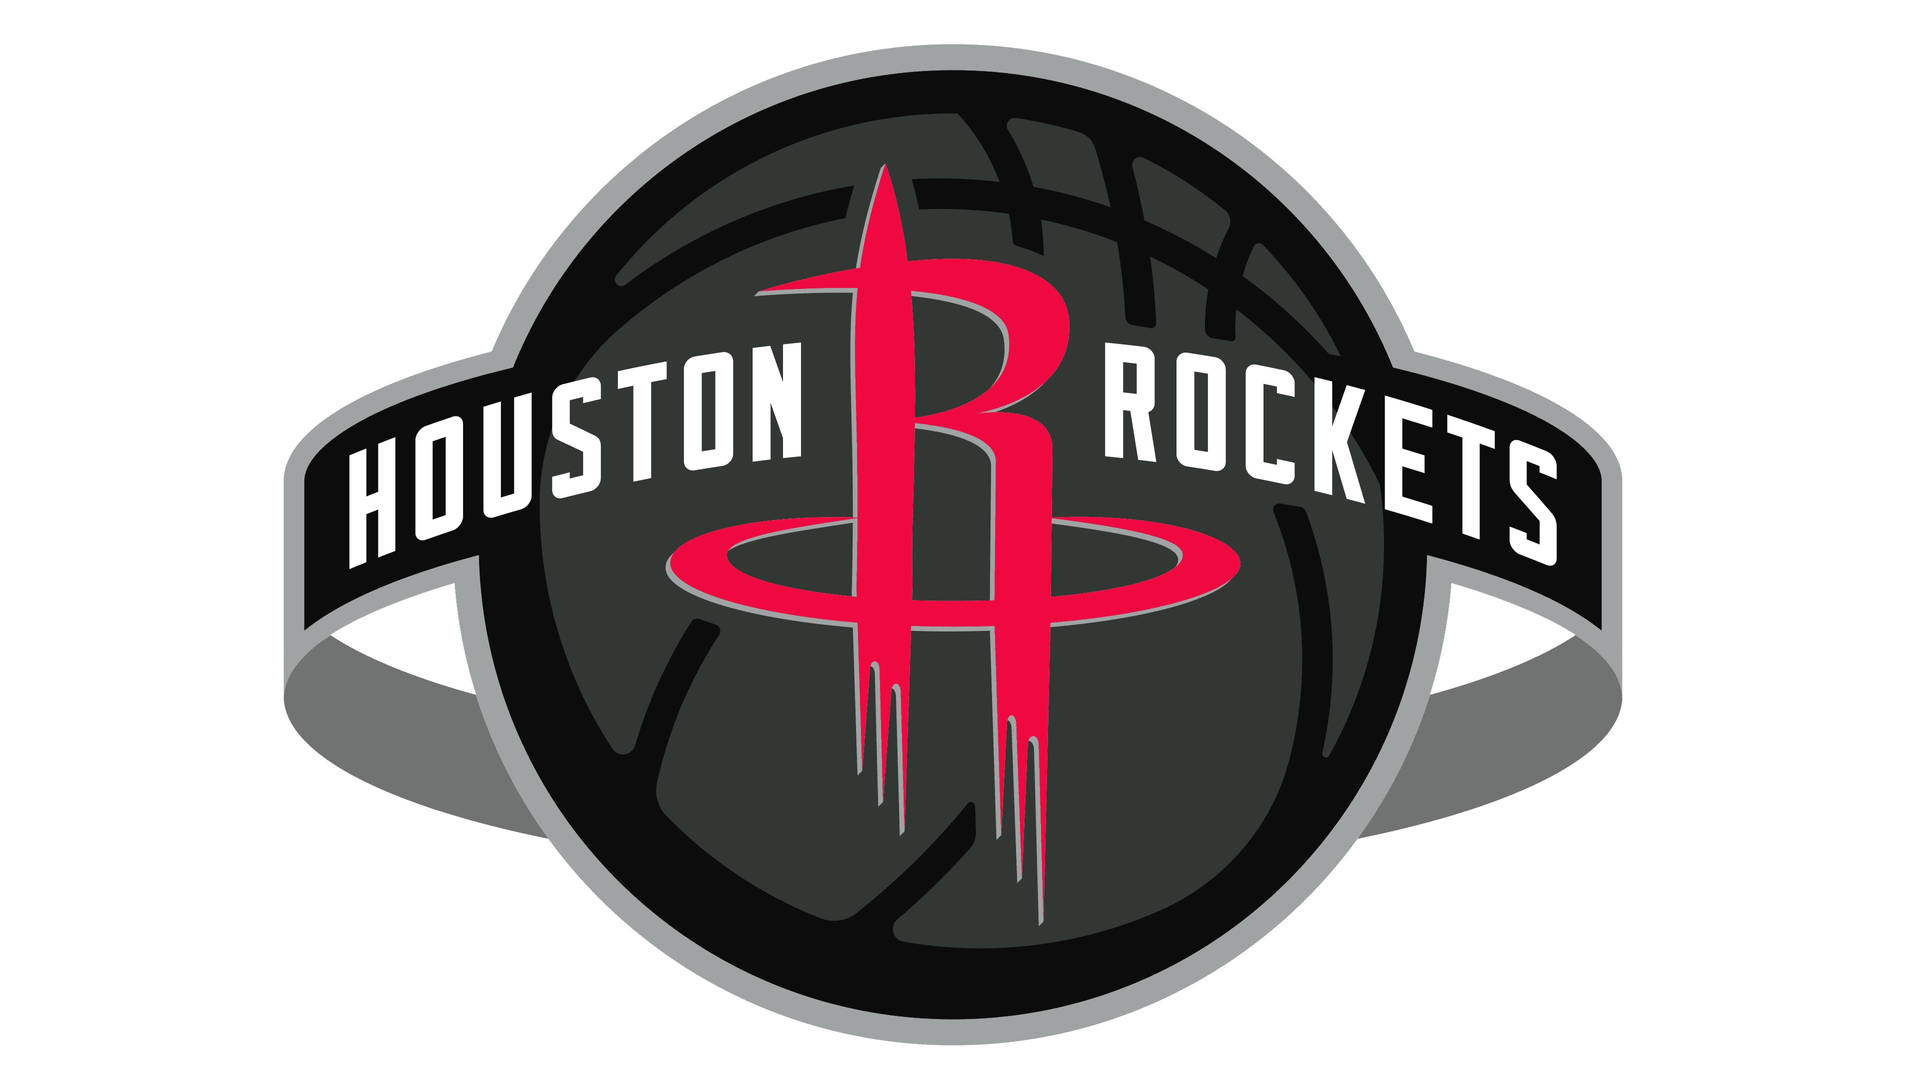 Houston Rockets Basketball-logo Wallpaper